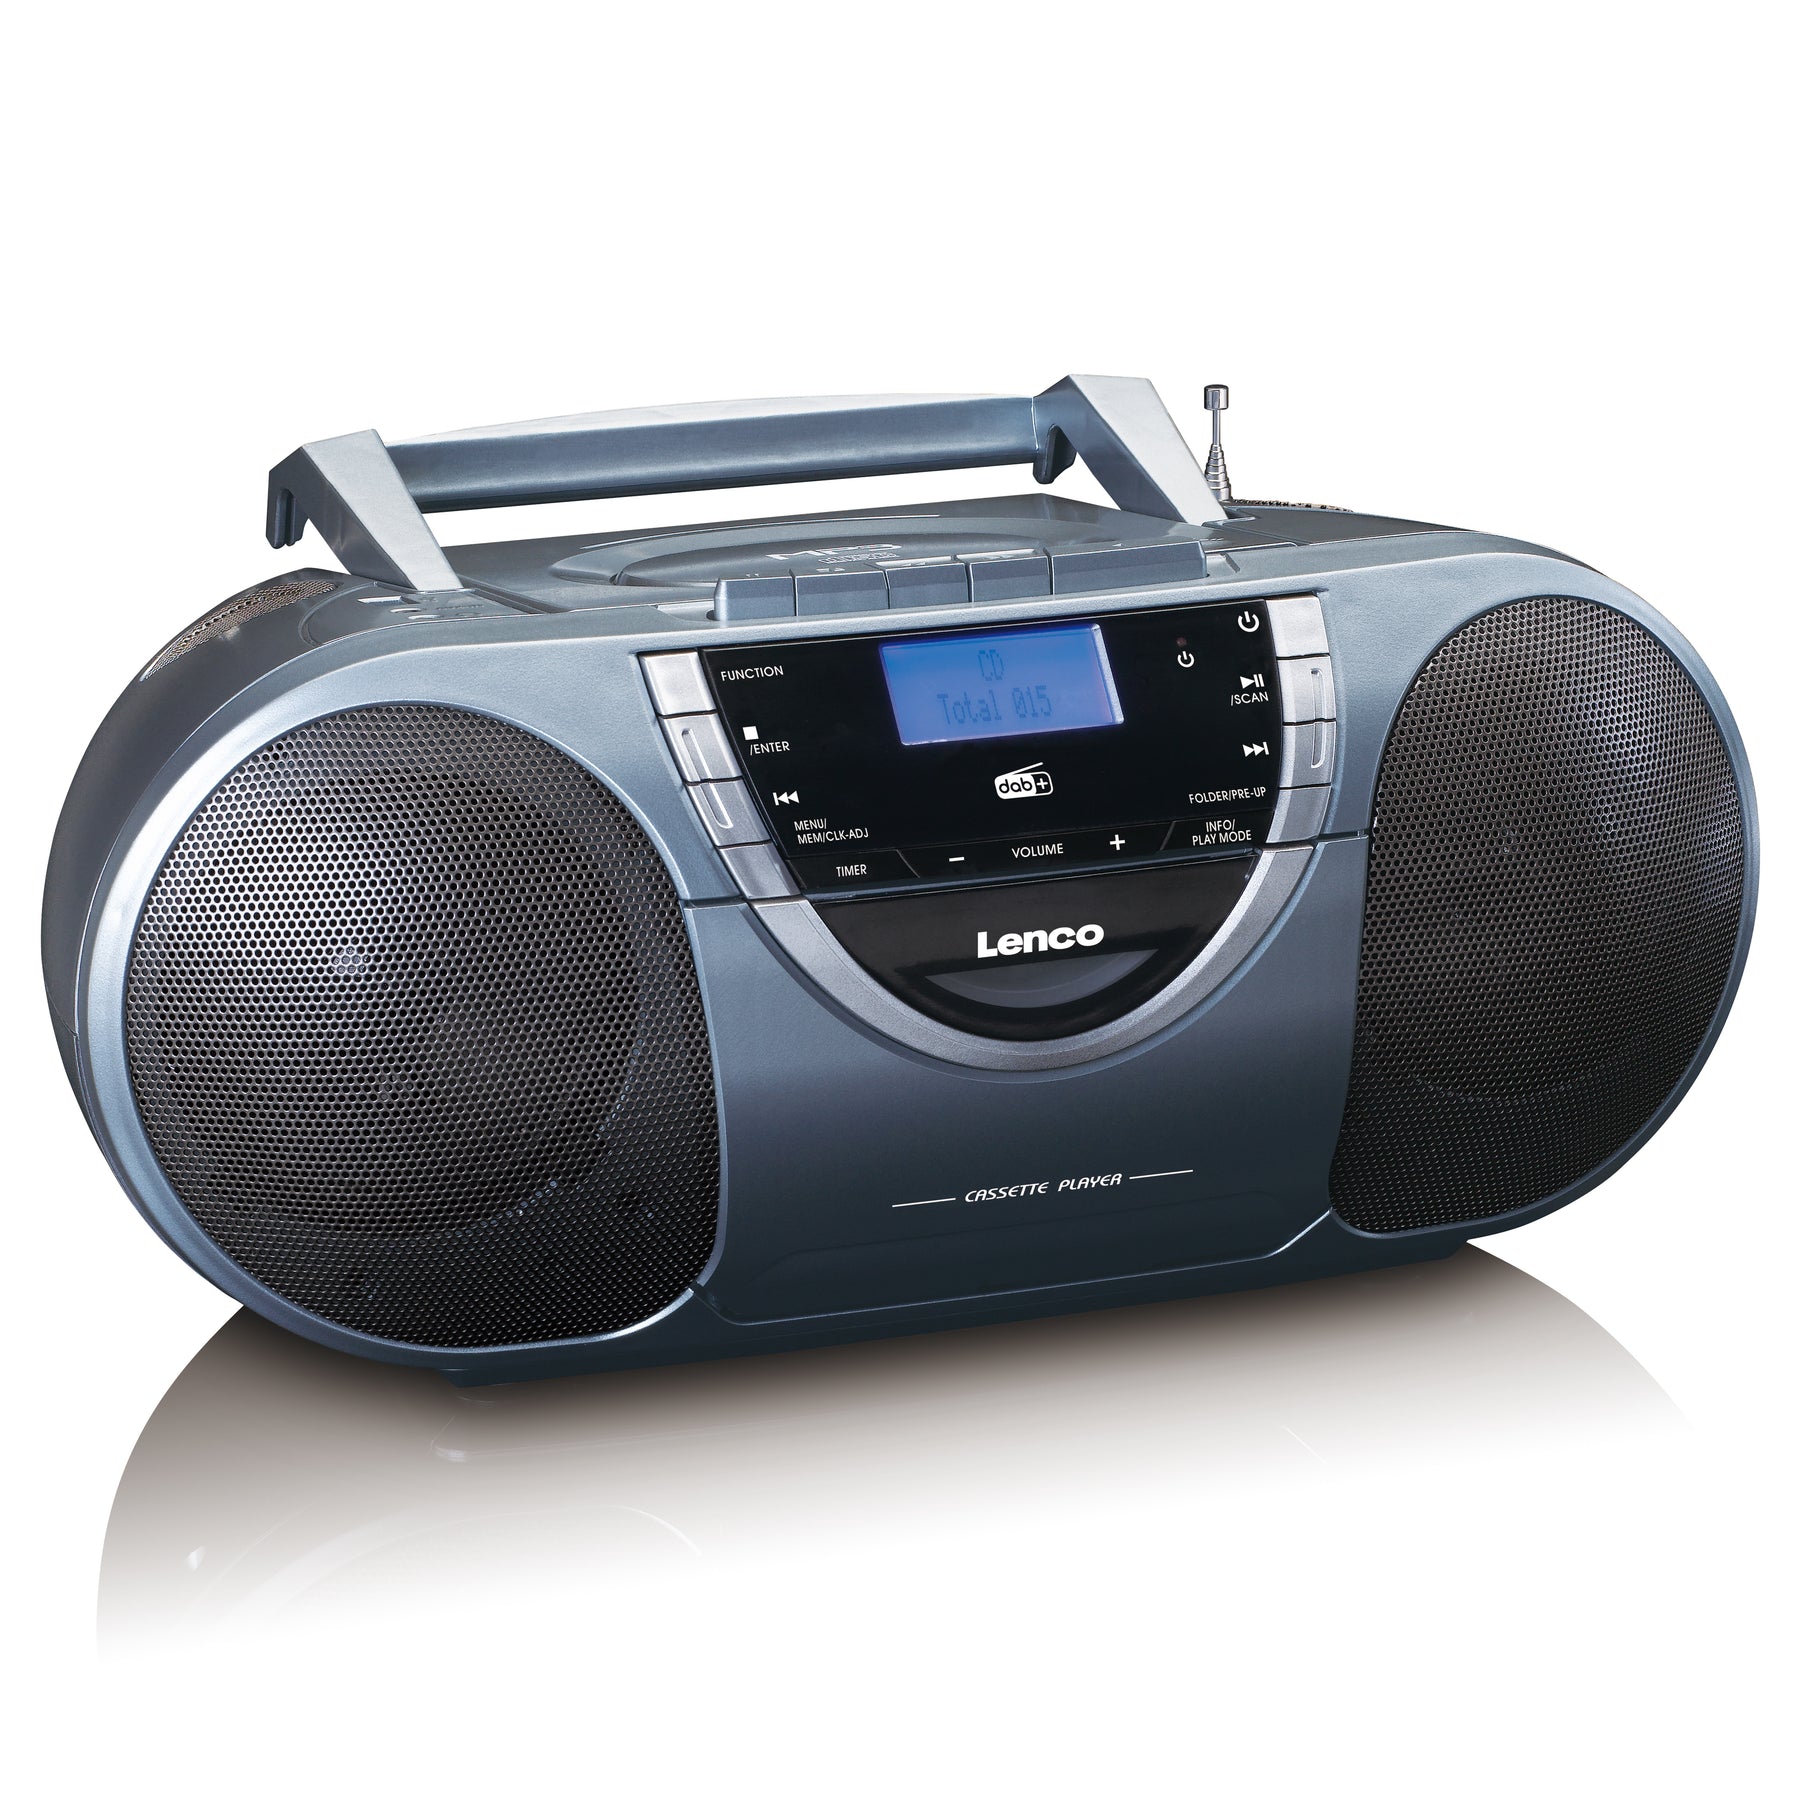 LENCO SCD-6800GY - Boombox and Lenco -Catalog with FM – MP3 player DAB+, radio CD